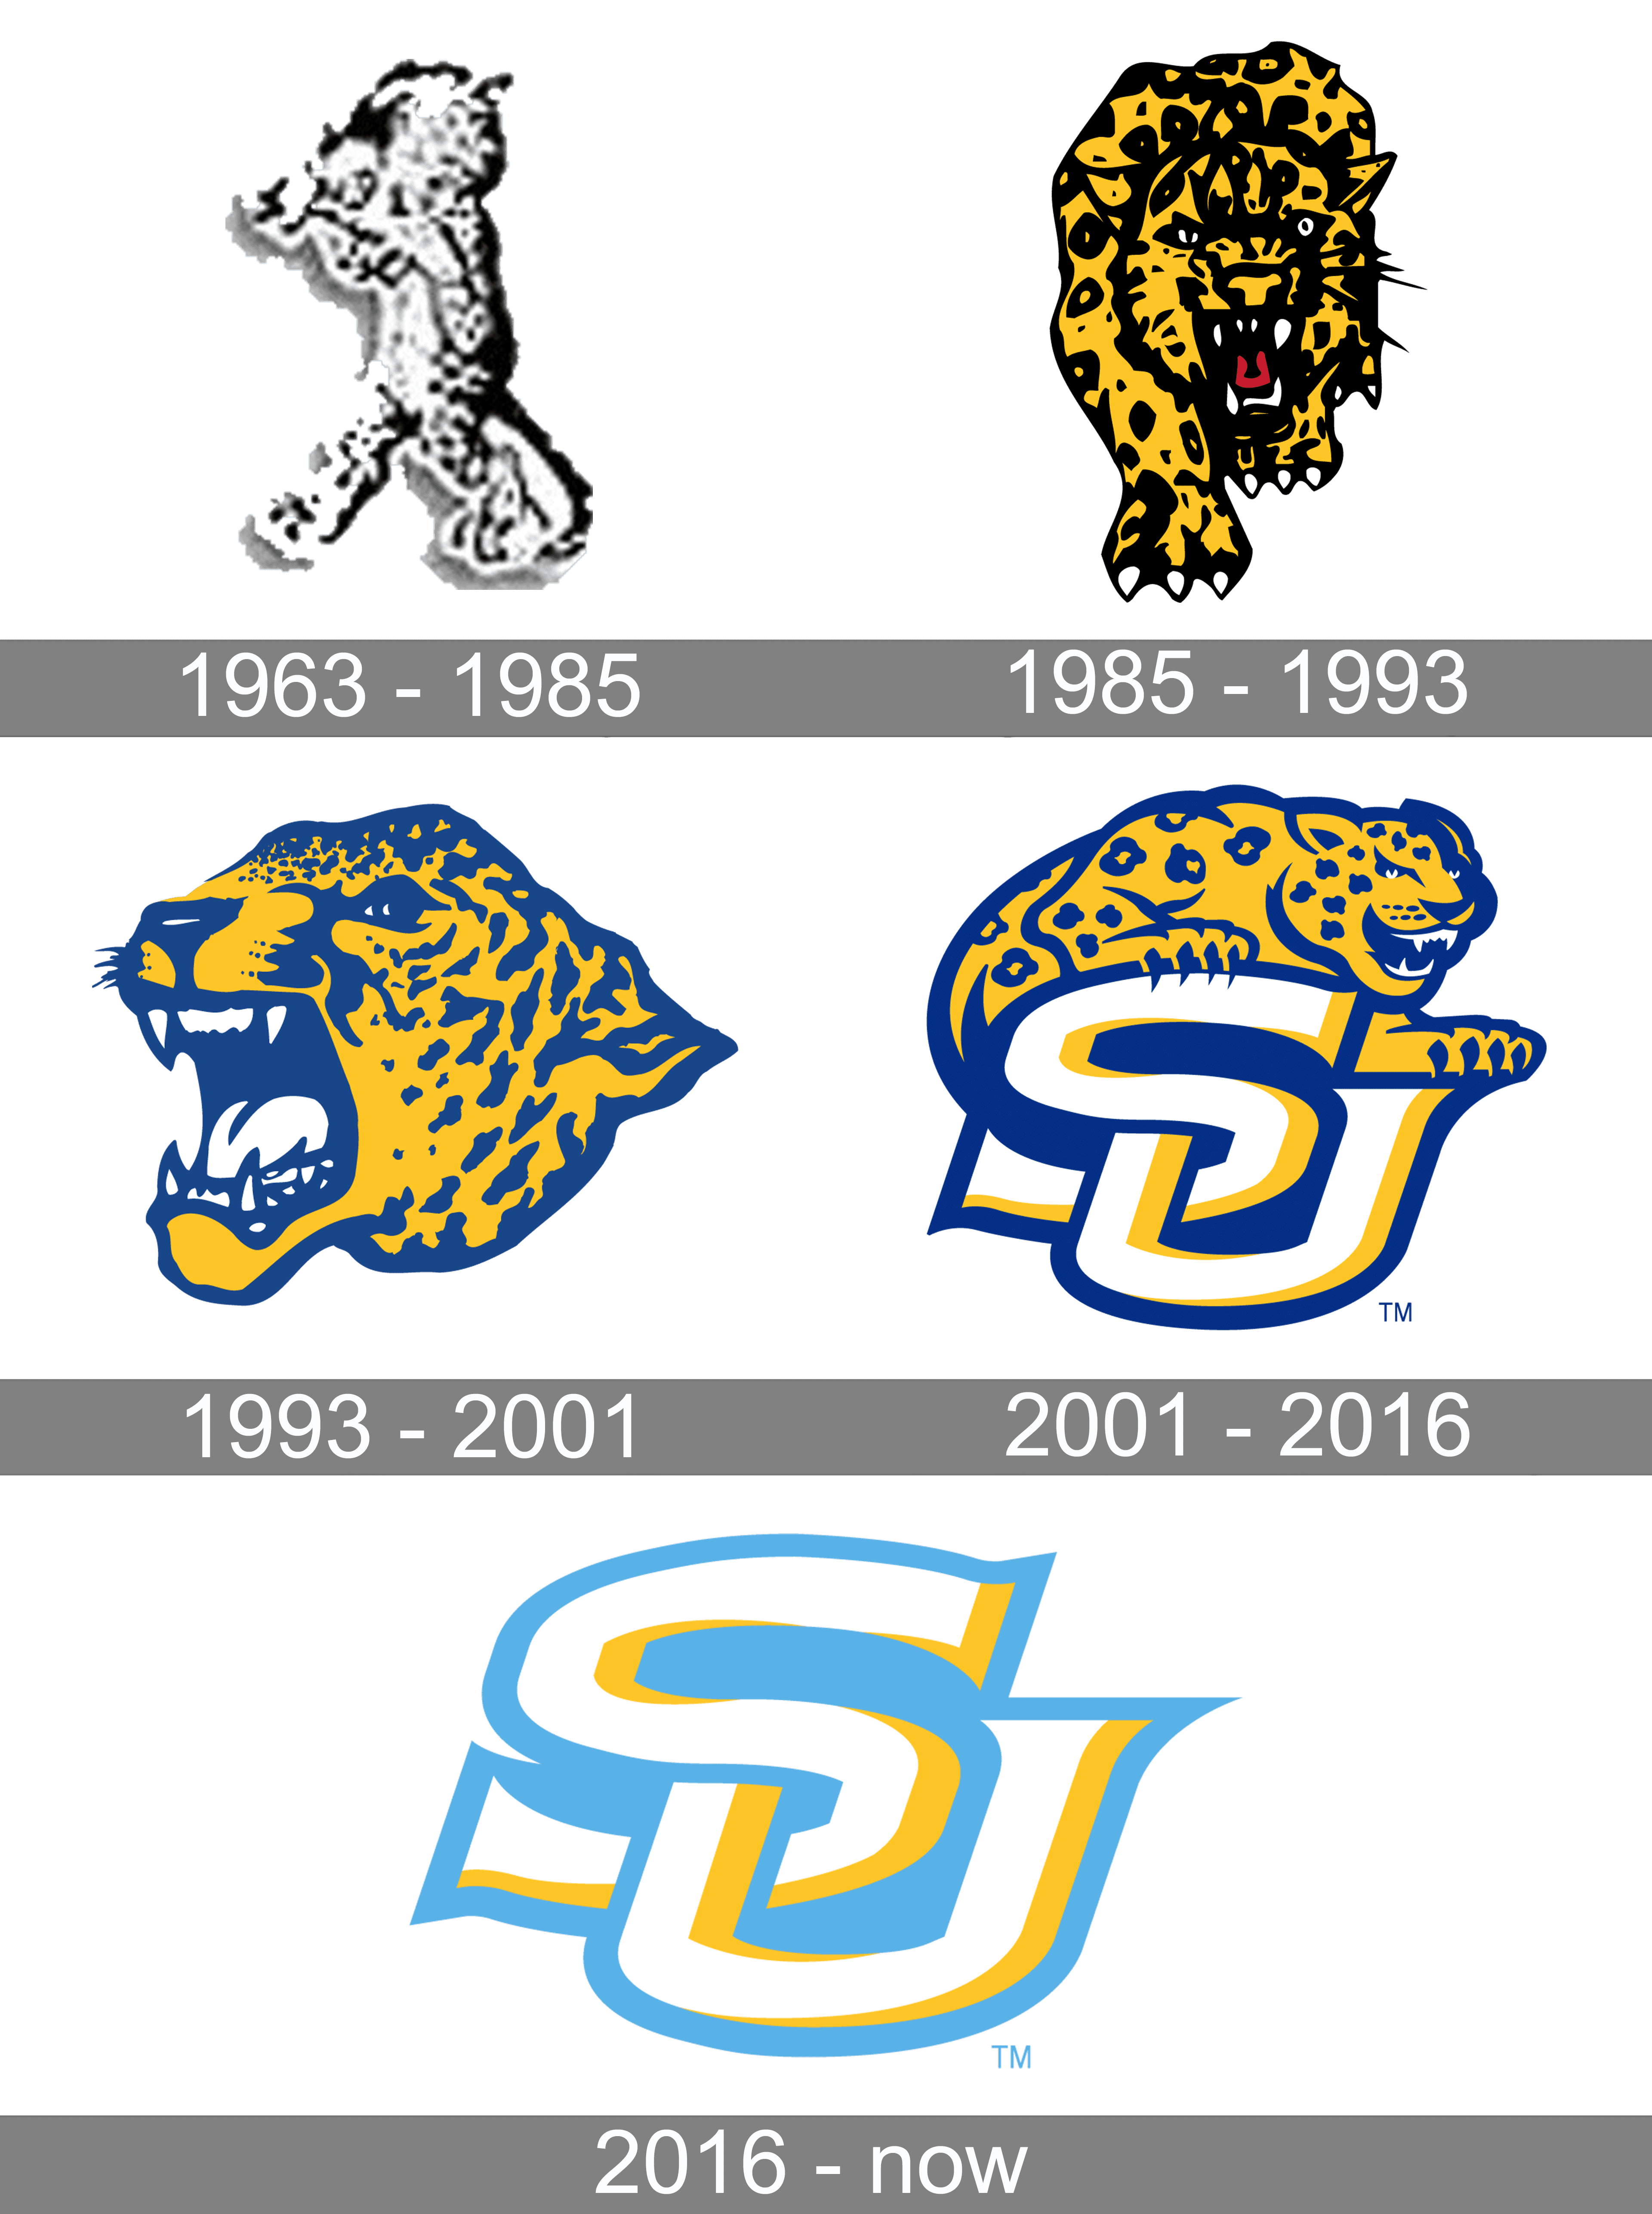 Principal 95 Imagen History Of Jaguar Logo Vn